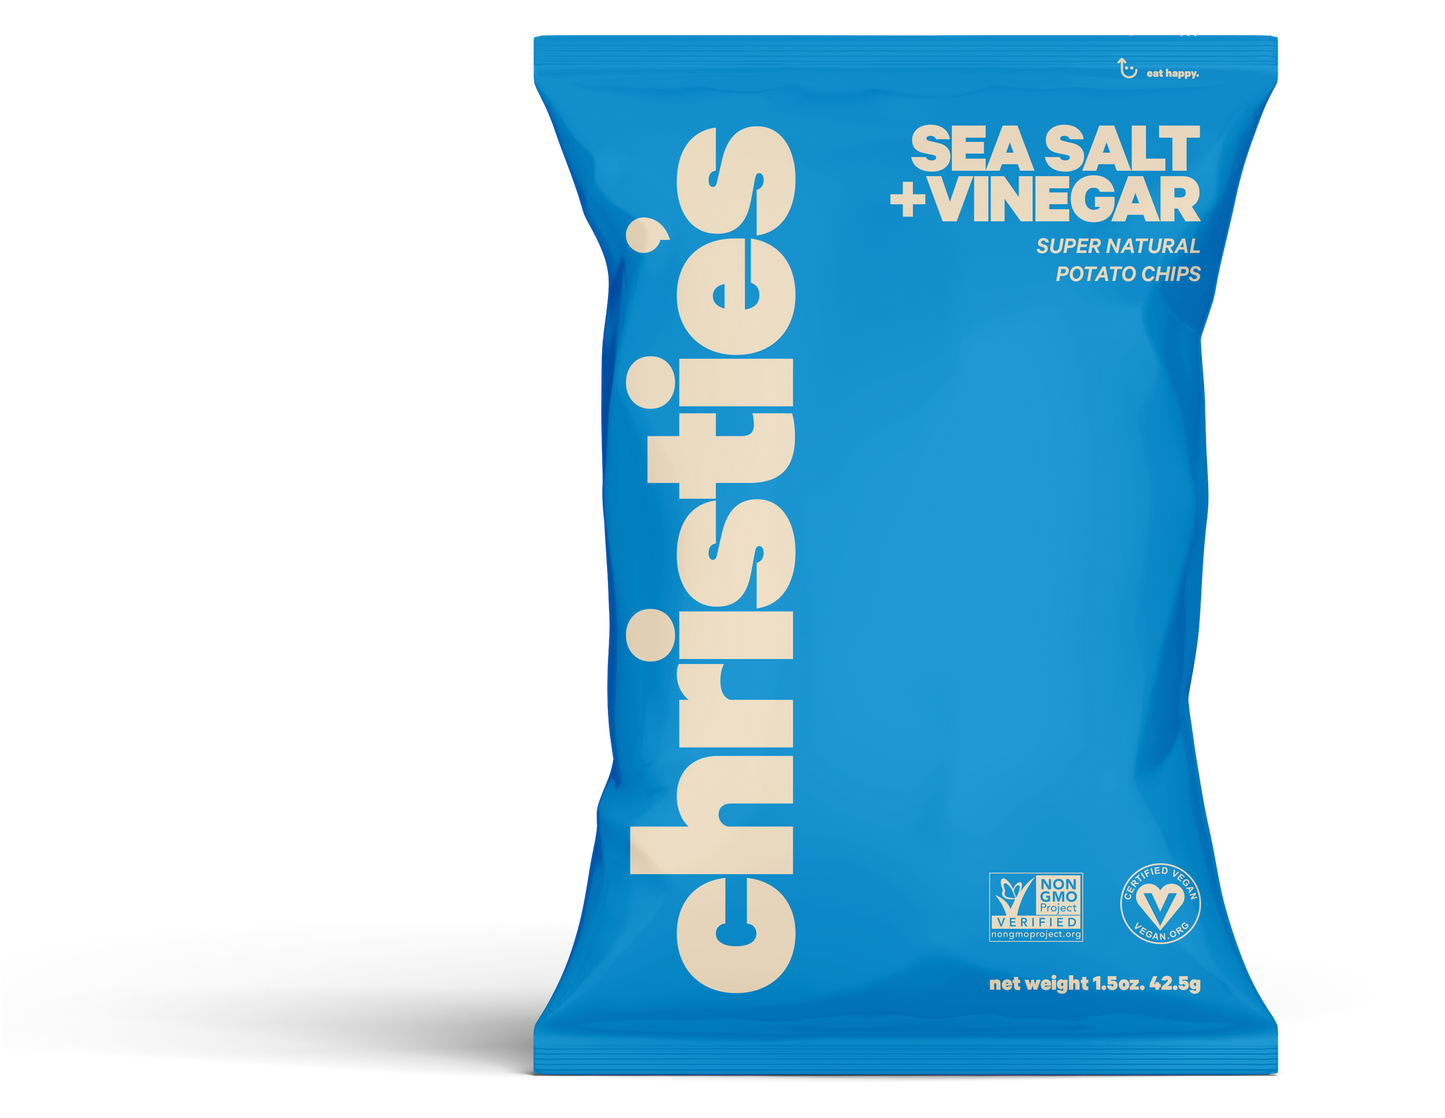 Christie's Sea Salt and Vinegar Potato Chips Snack Bag